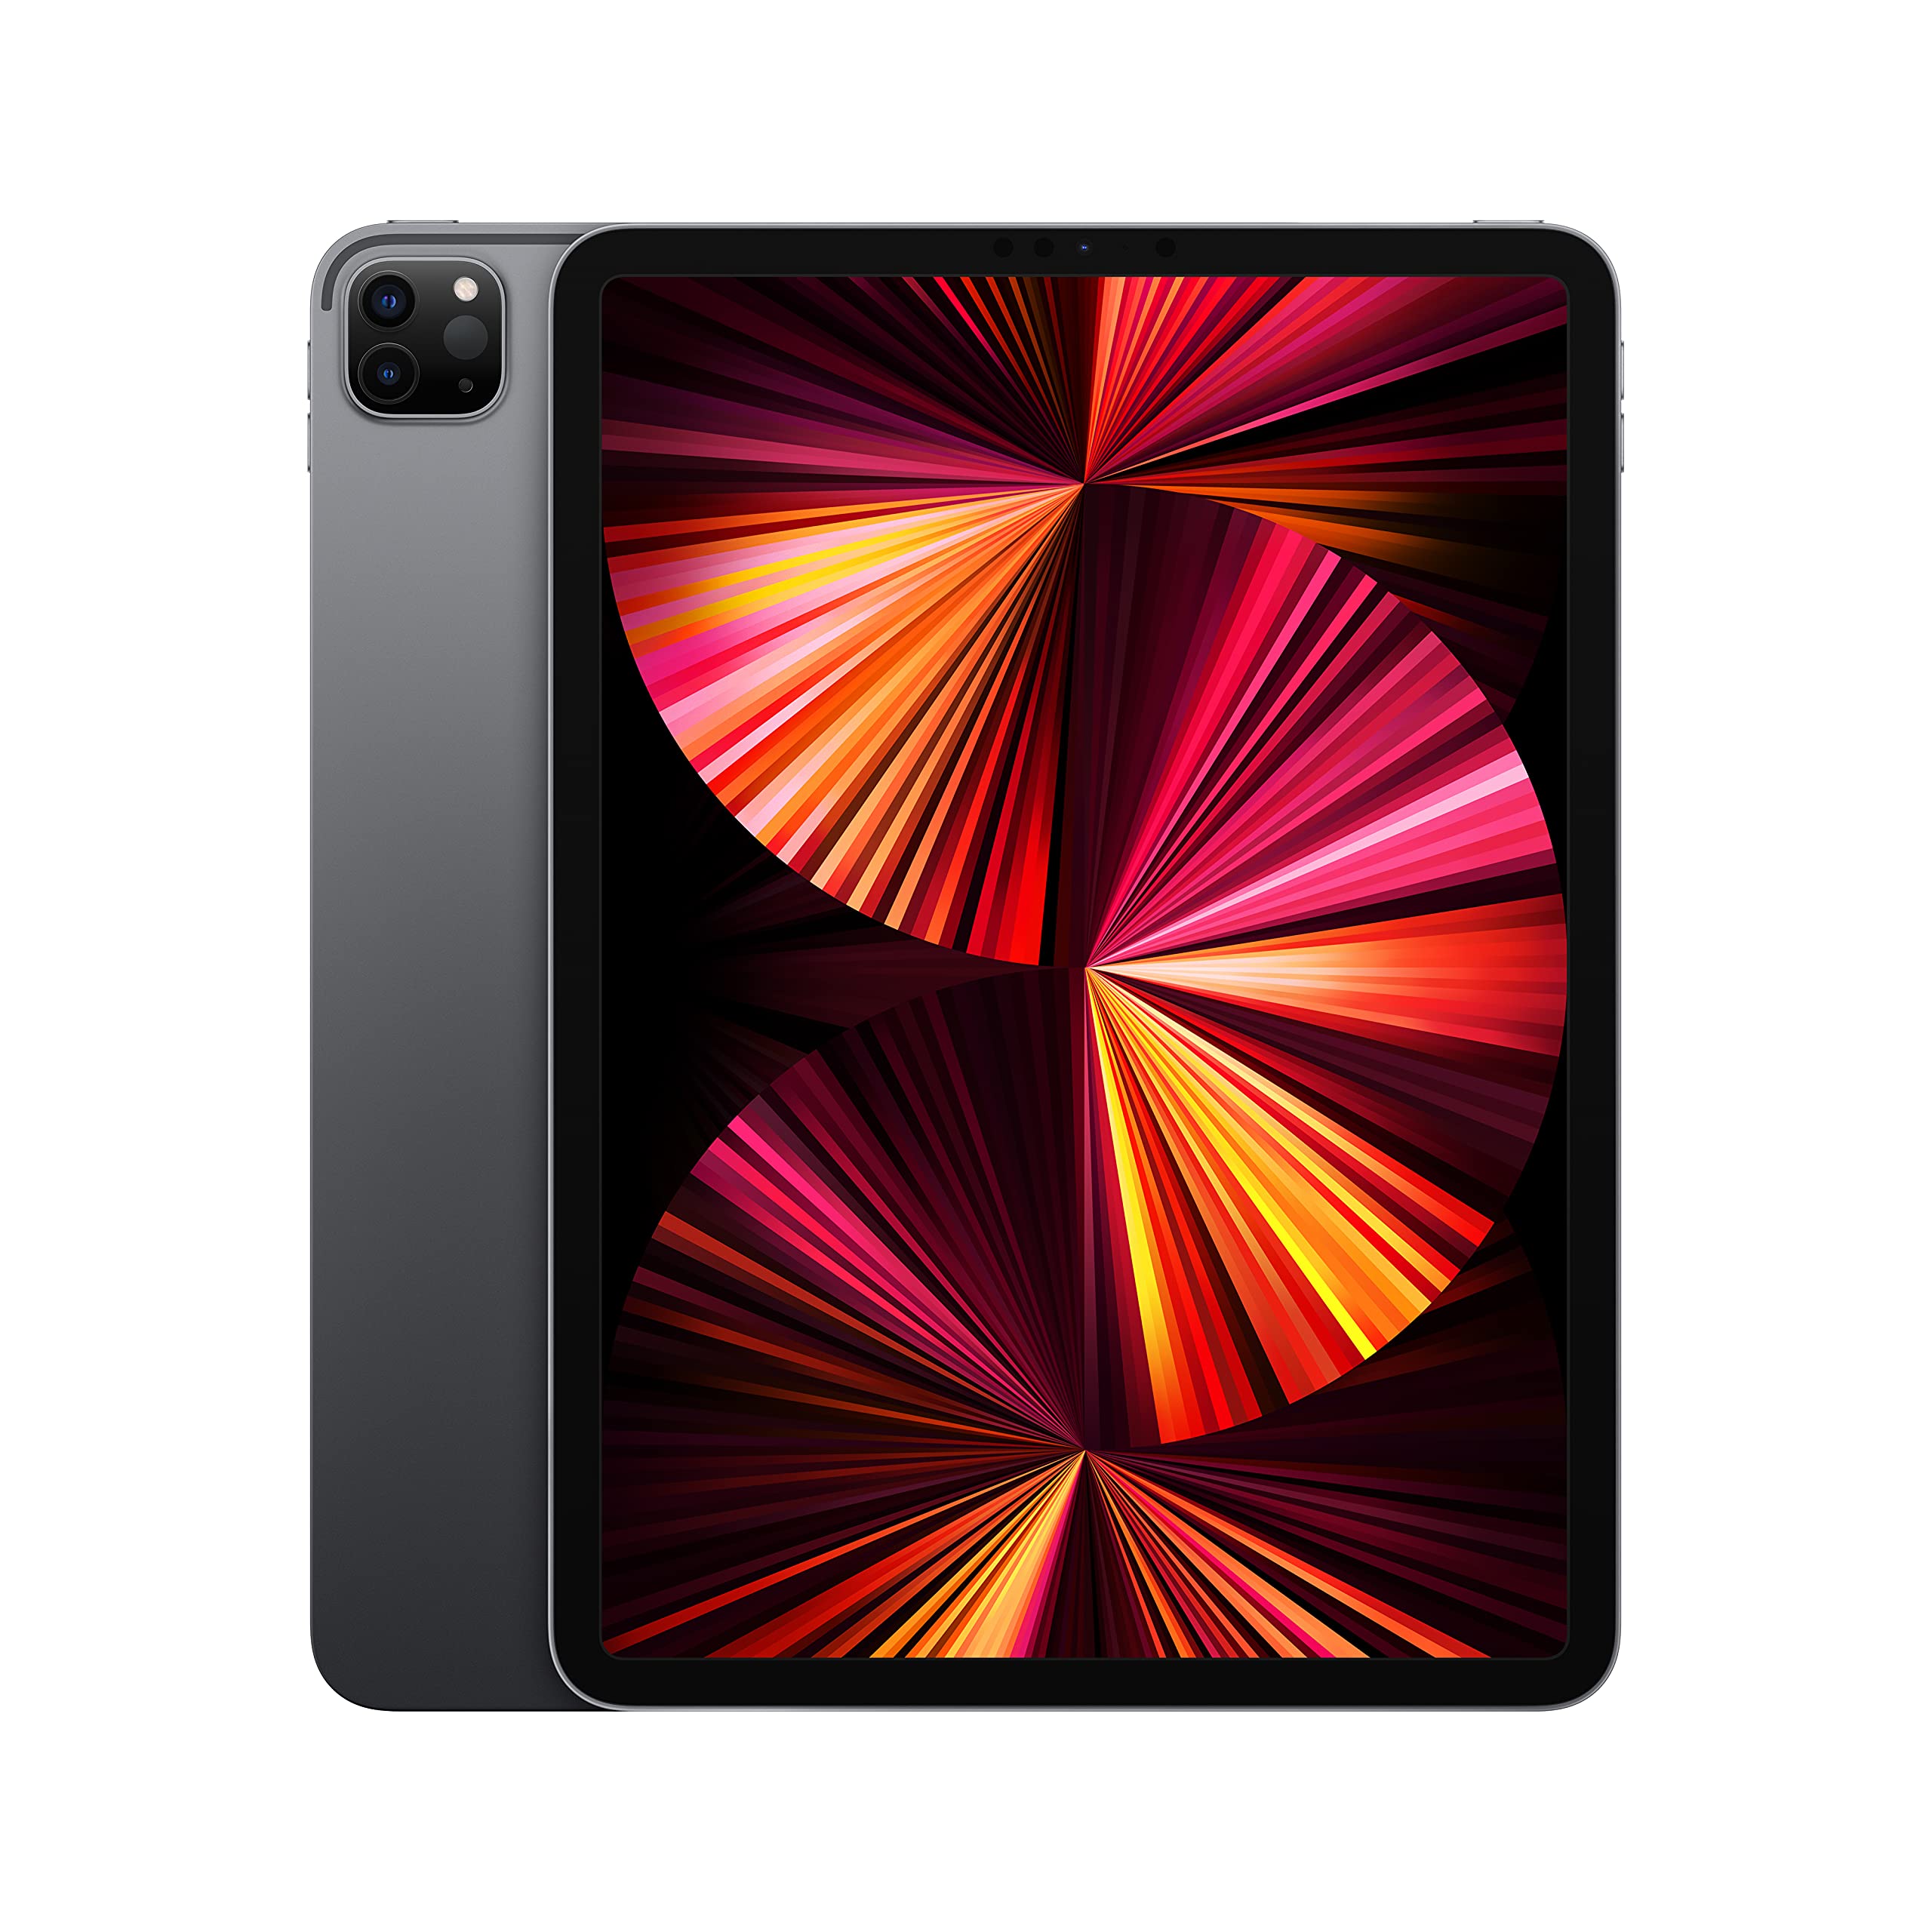 2021 Apple iPad Pro (11-inch, Wi-Fi, 256GB) - Space Grey (3rd Generation)